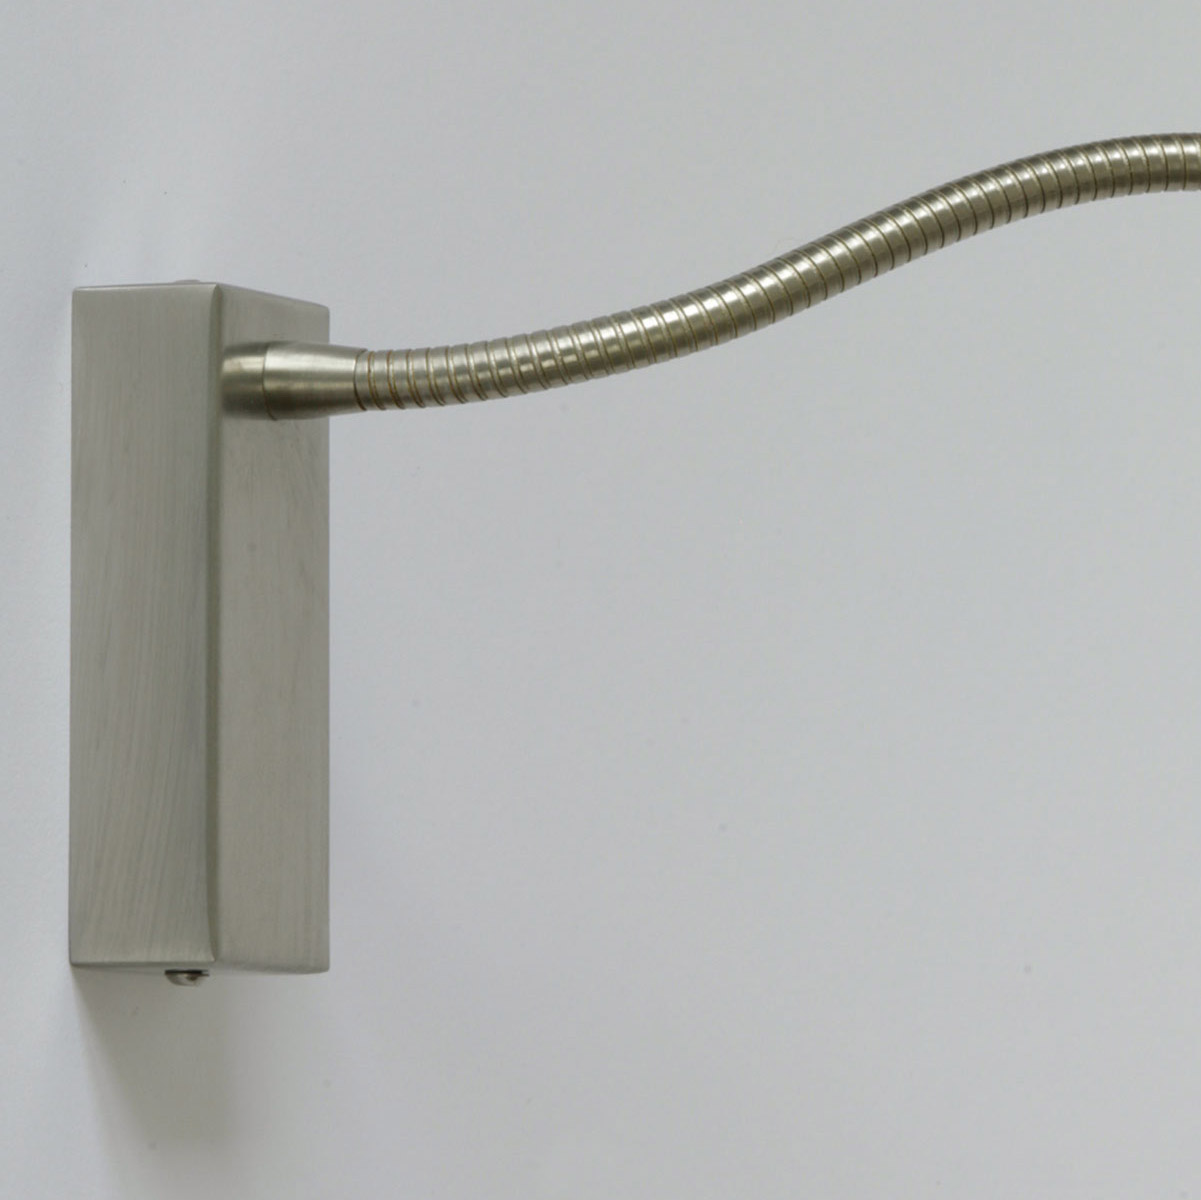 Flexible Wand-Leselampe mit 40 cm-Schlaucharm aus Messing oder Kupfer: Flex-Arm Strahler-Wandleuchte, z.B. am Bett – hier aus Messing, 18 matt vernickelt